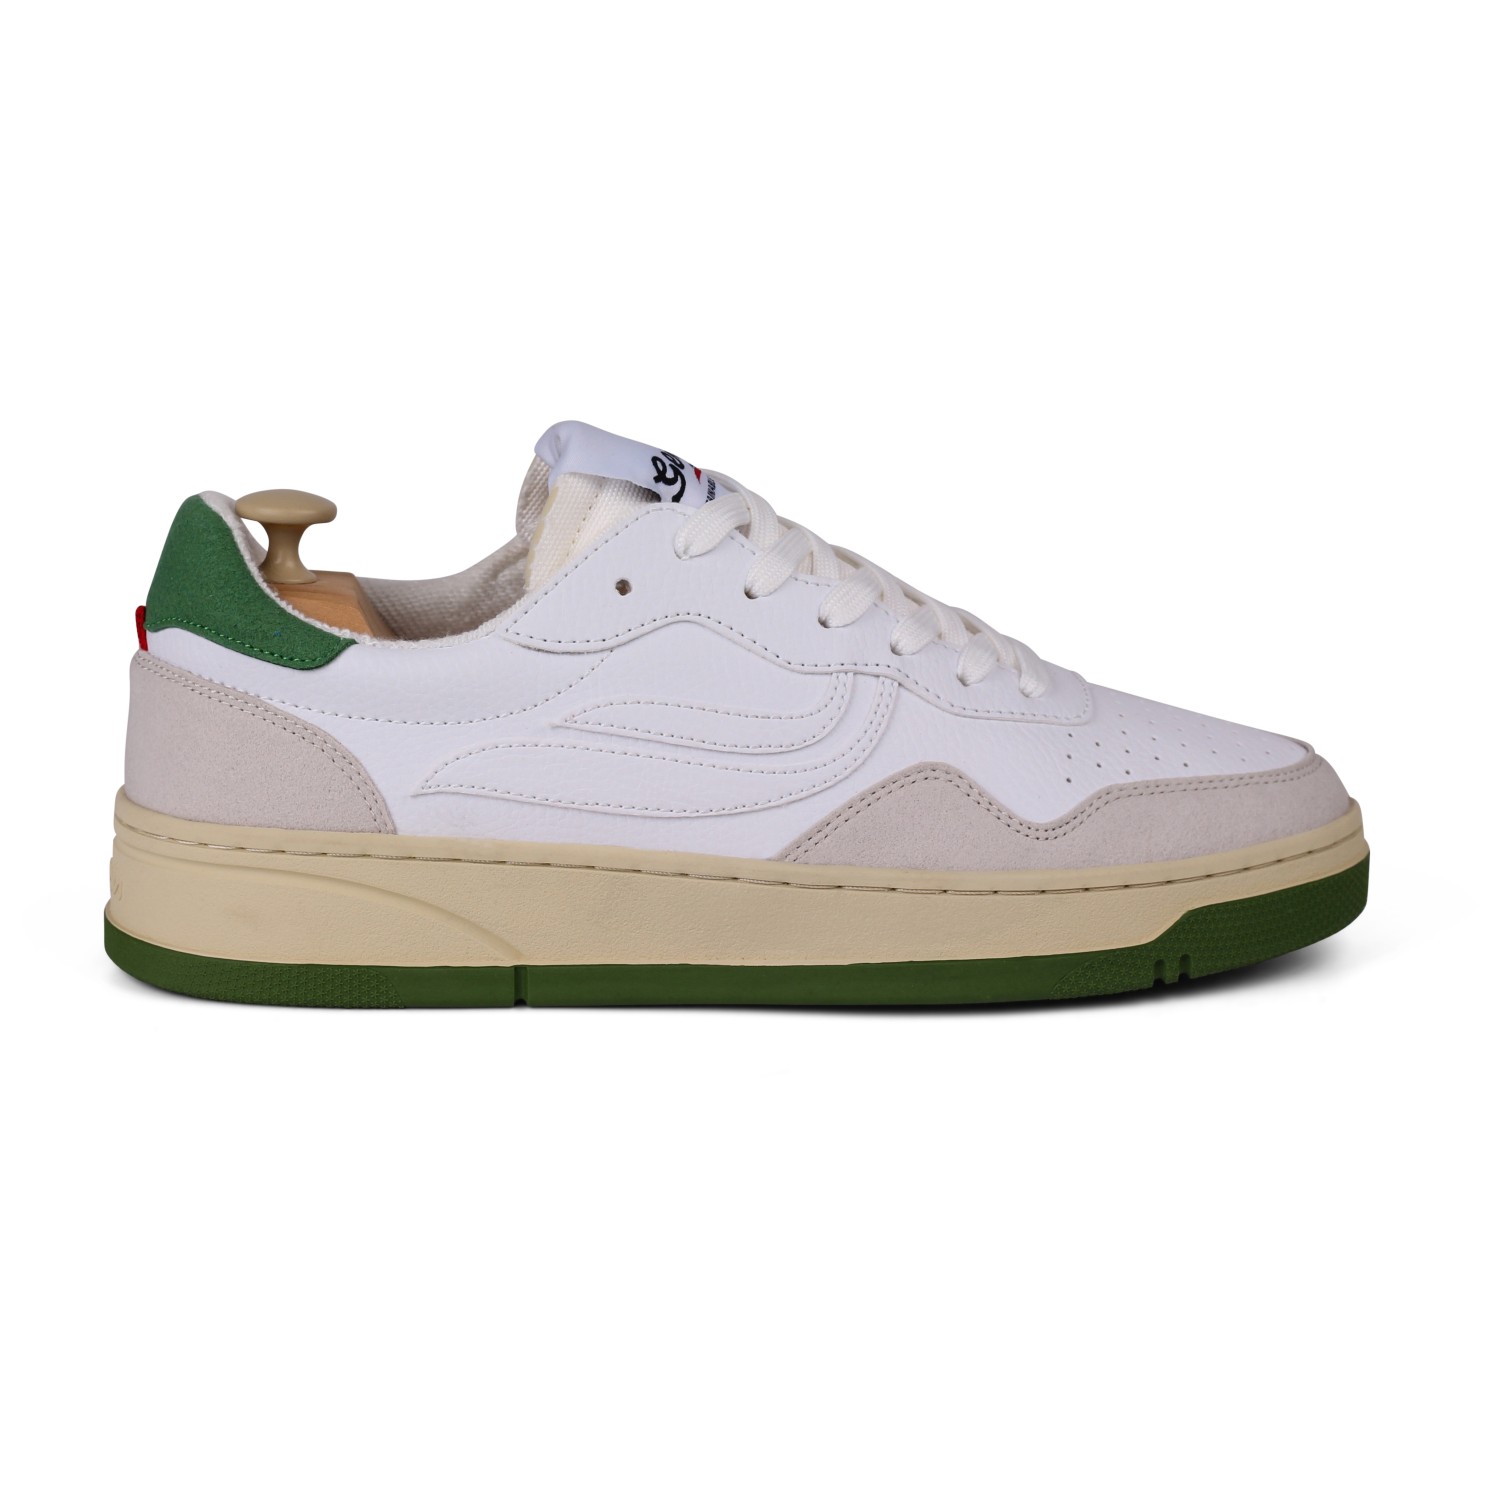 Кроссовки Genesis Footwear G Soley 2 0 Green Serial, цвет Offwhite/White/Green guess genesis w1254g3